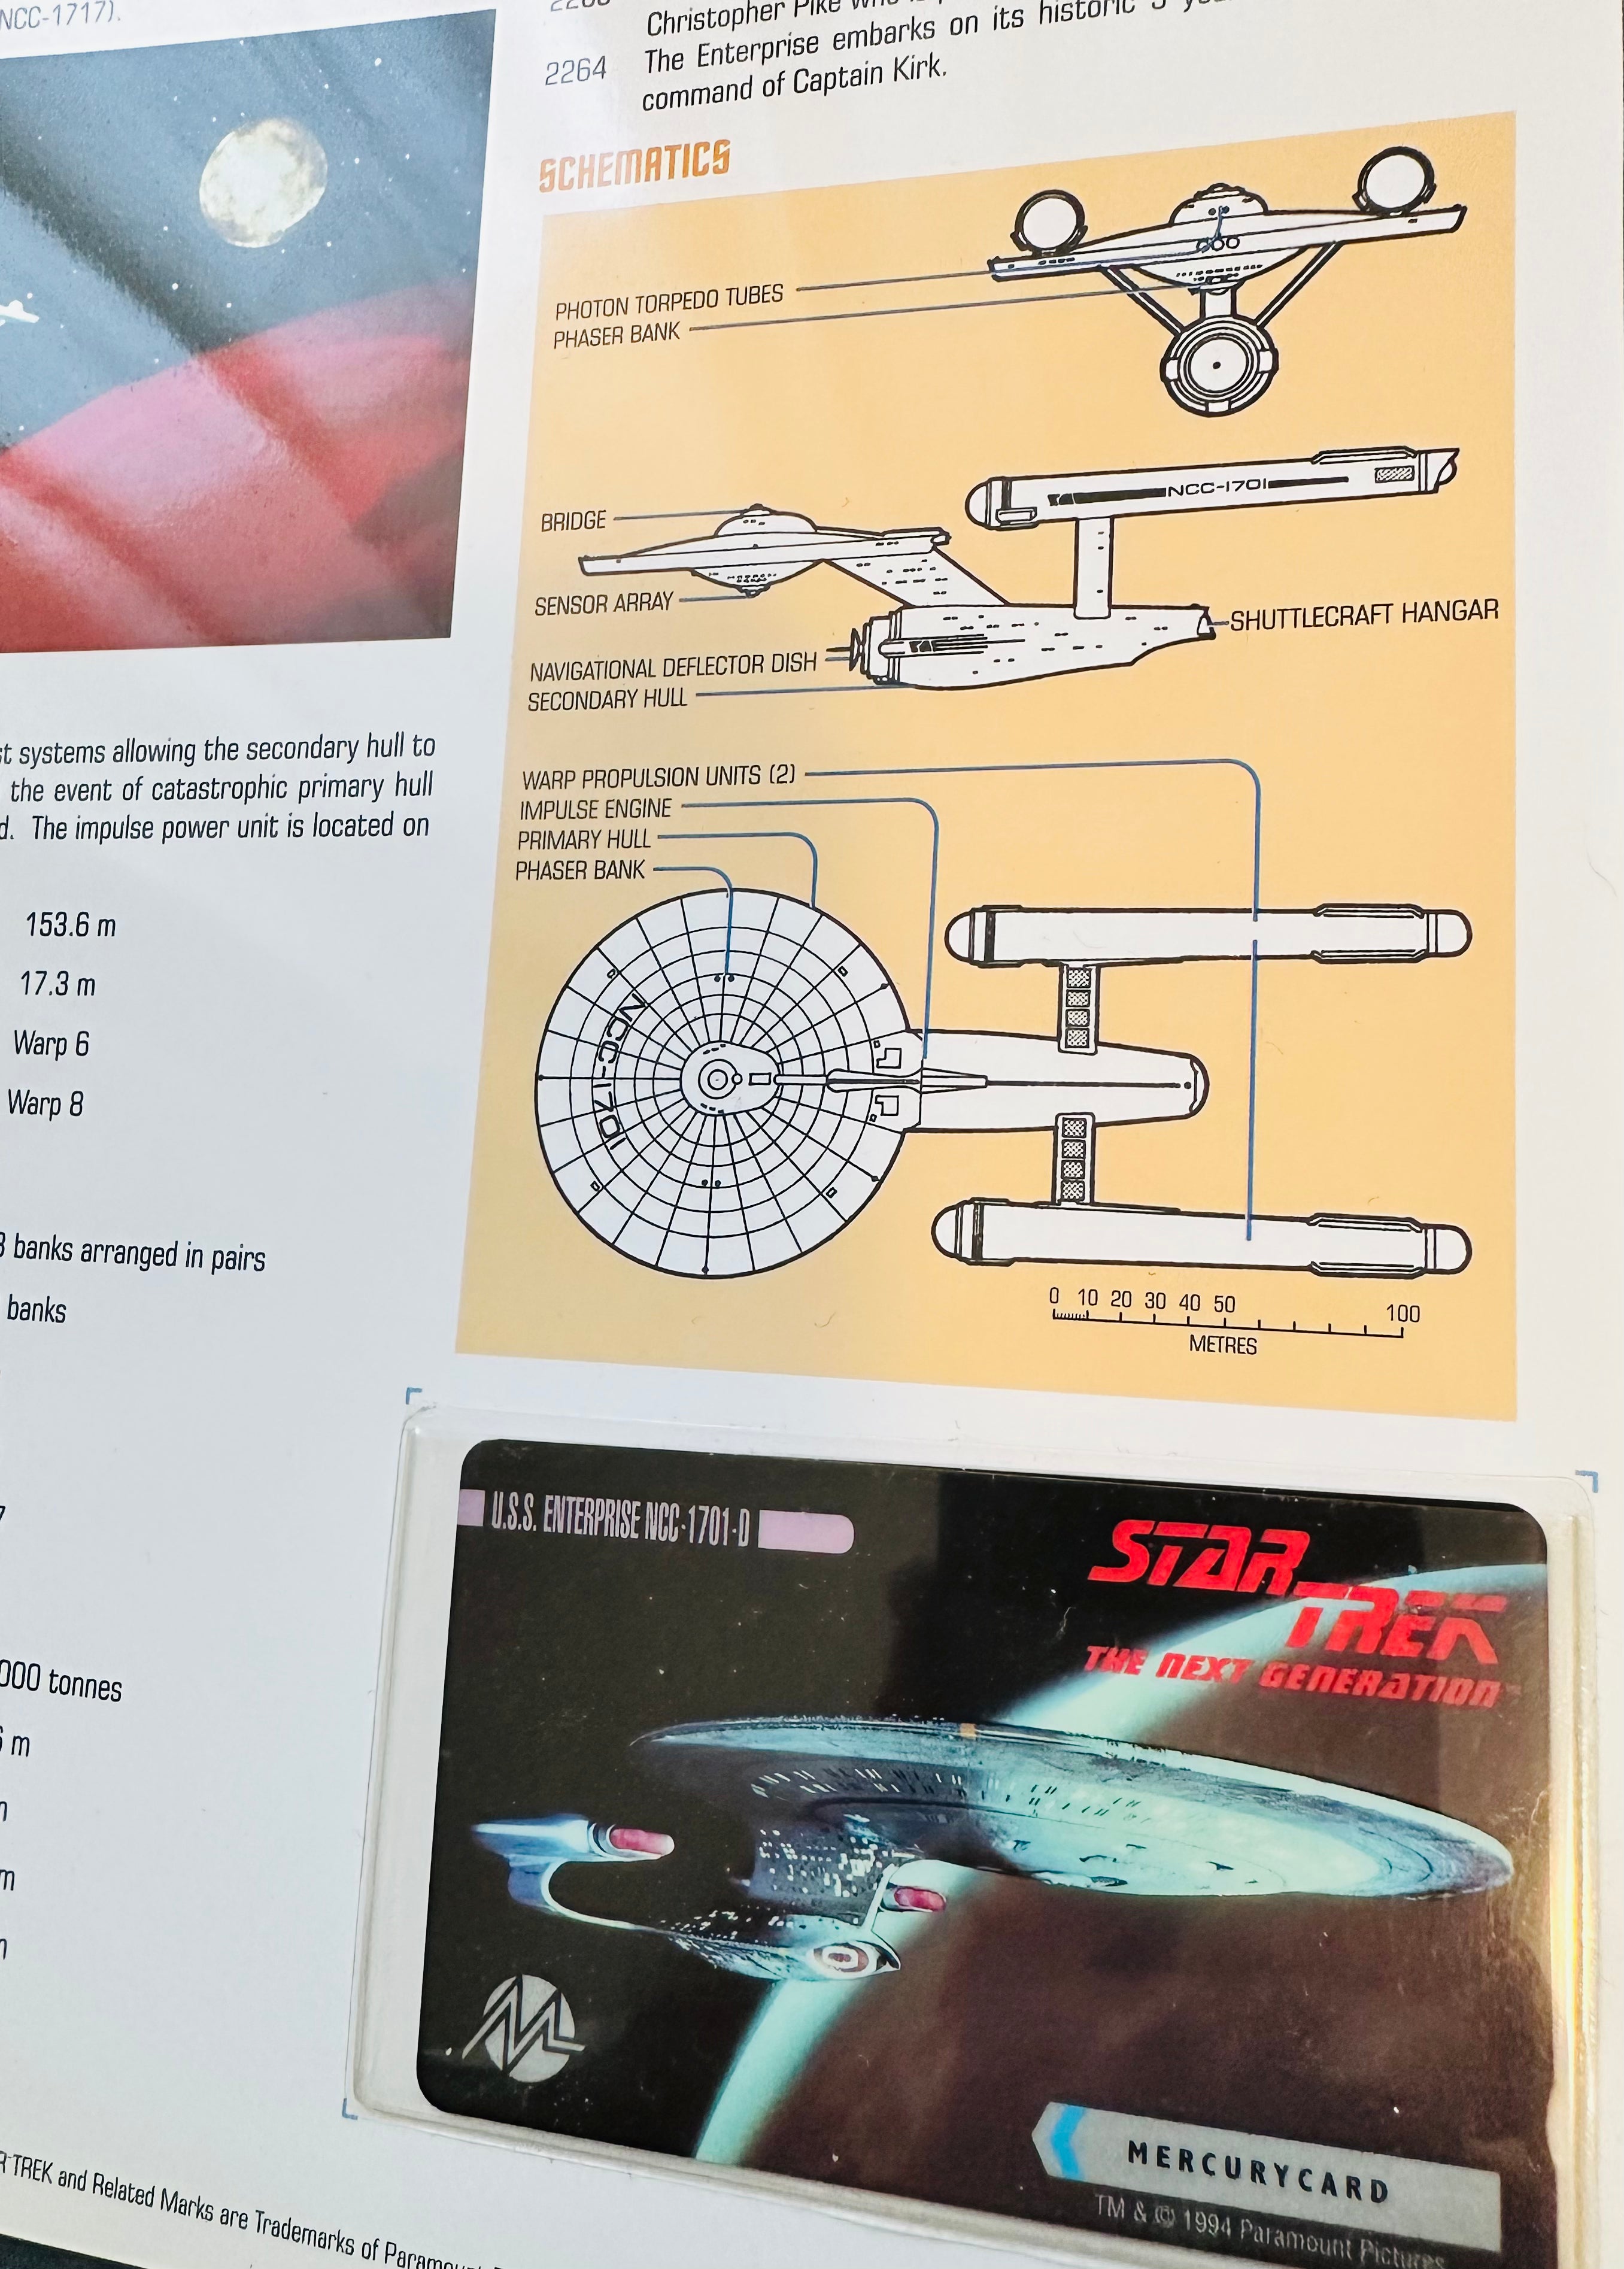 Star Trek Enterprise phone card with rare display page 1994